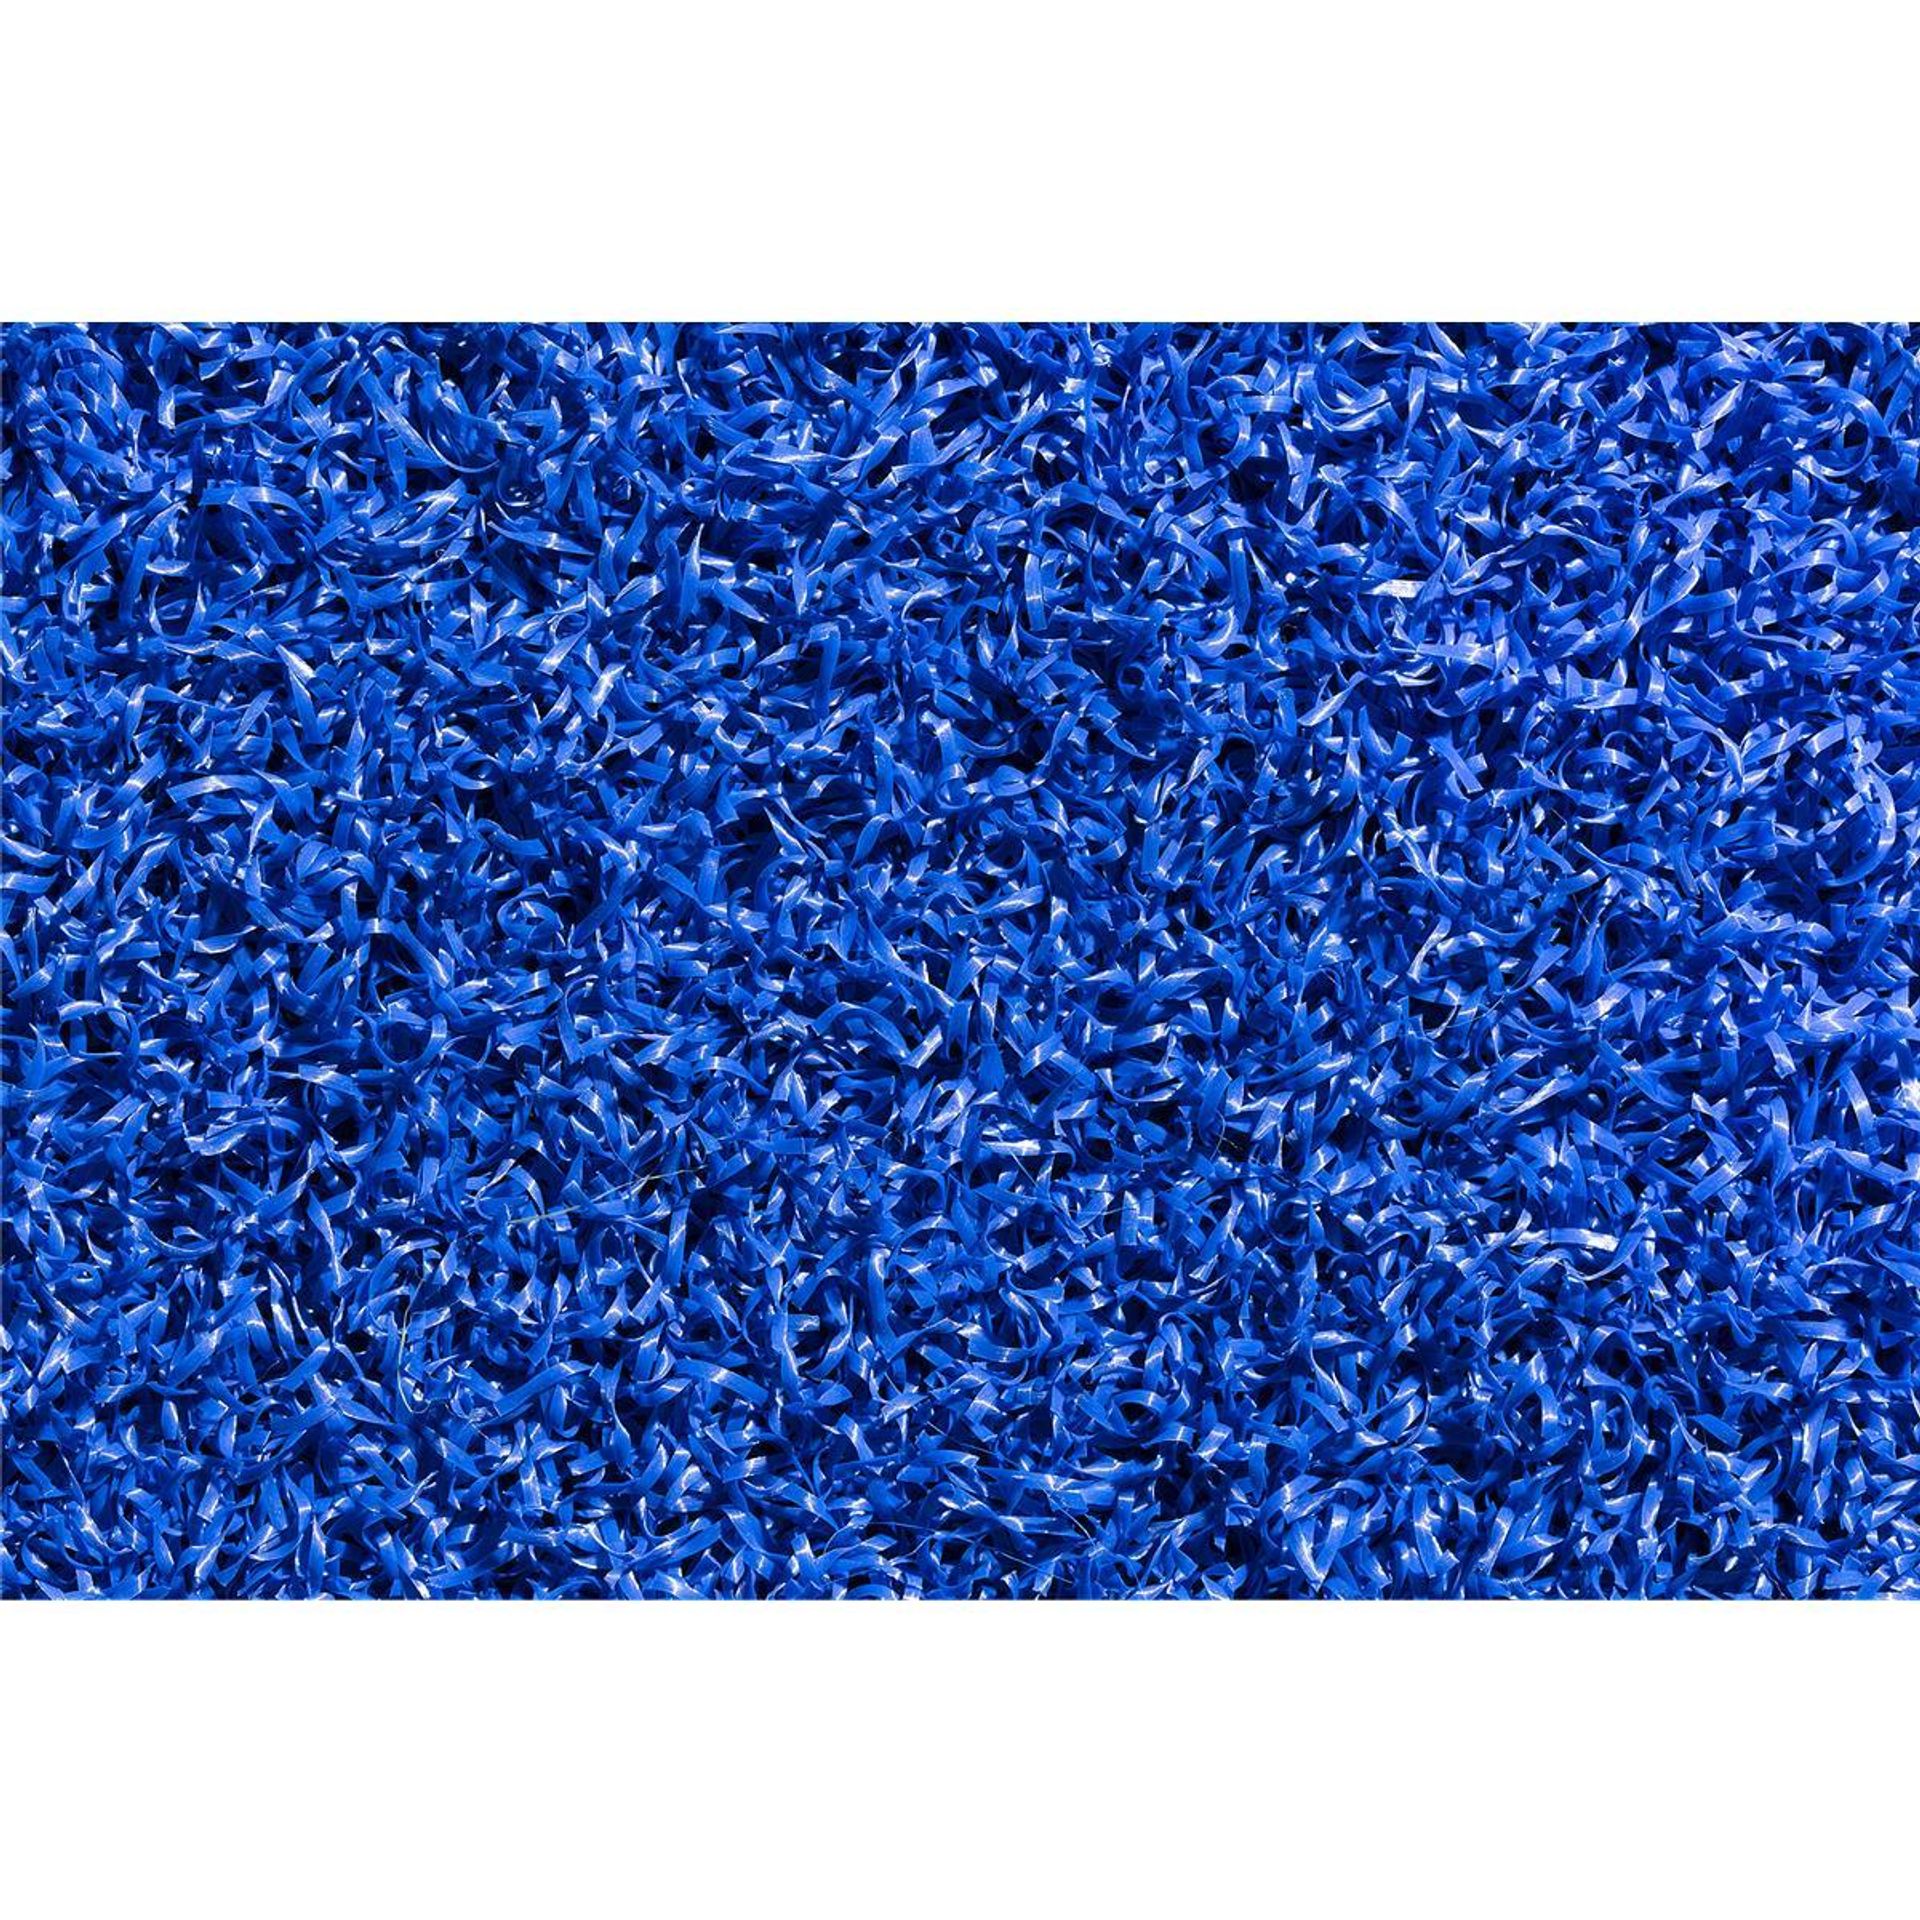 Kunstrasen 446 Colourful 010 blue - Breite 200 cm - Couponbezug